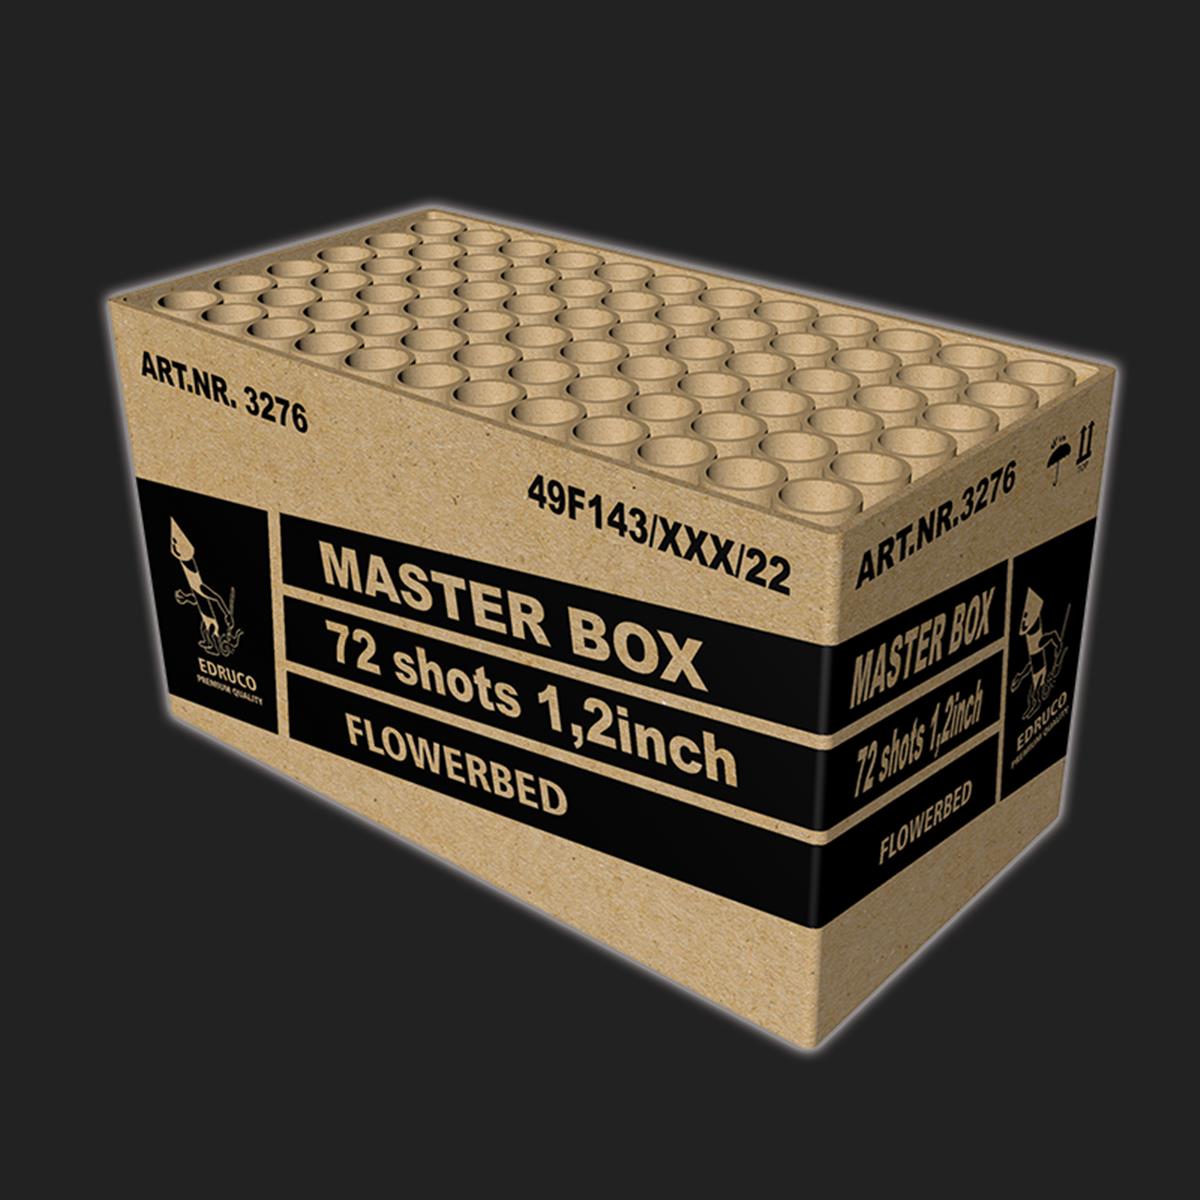 MASTER BOX - 72 SHOTS